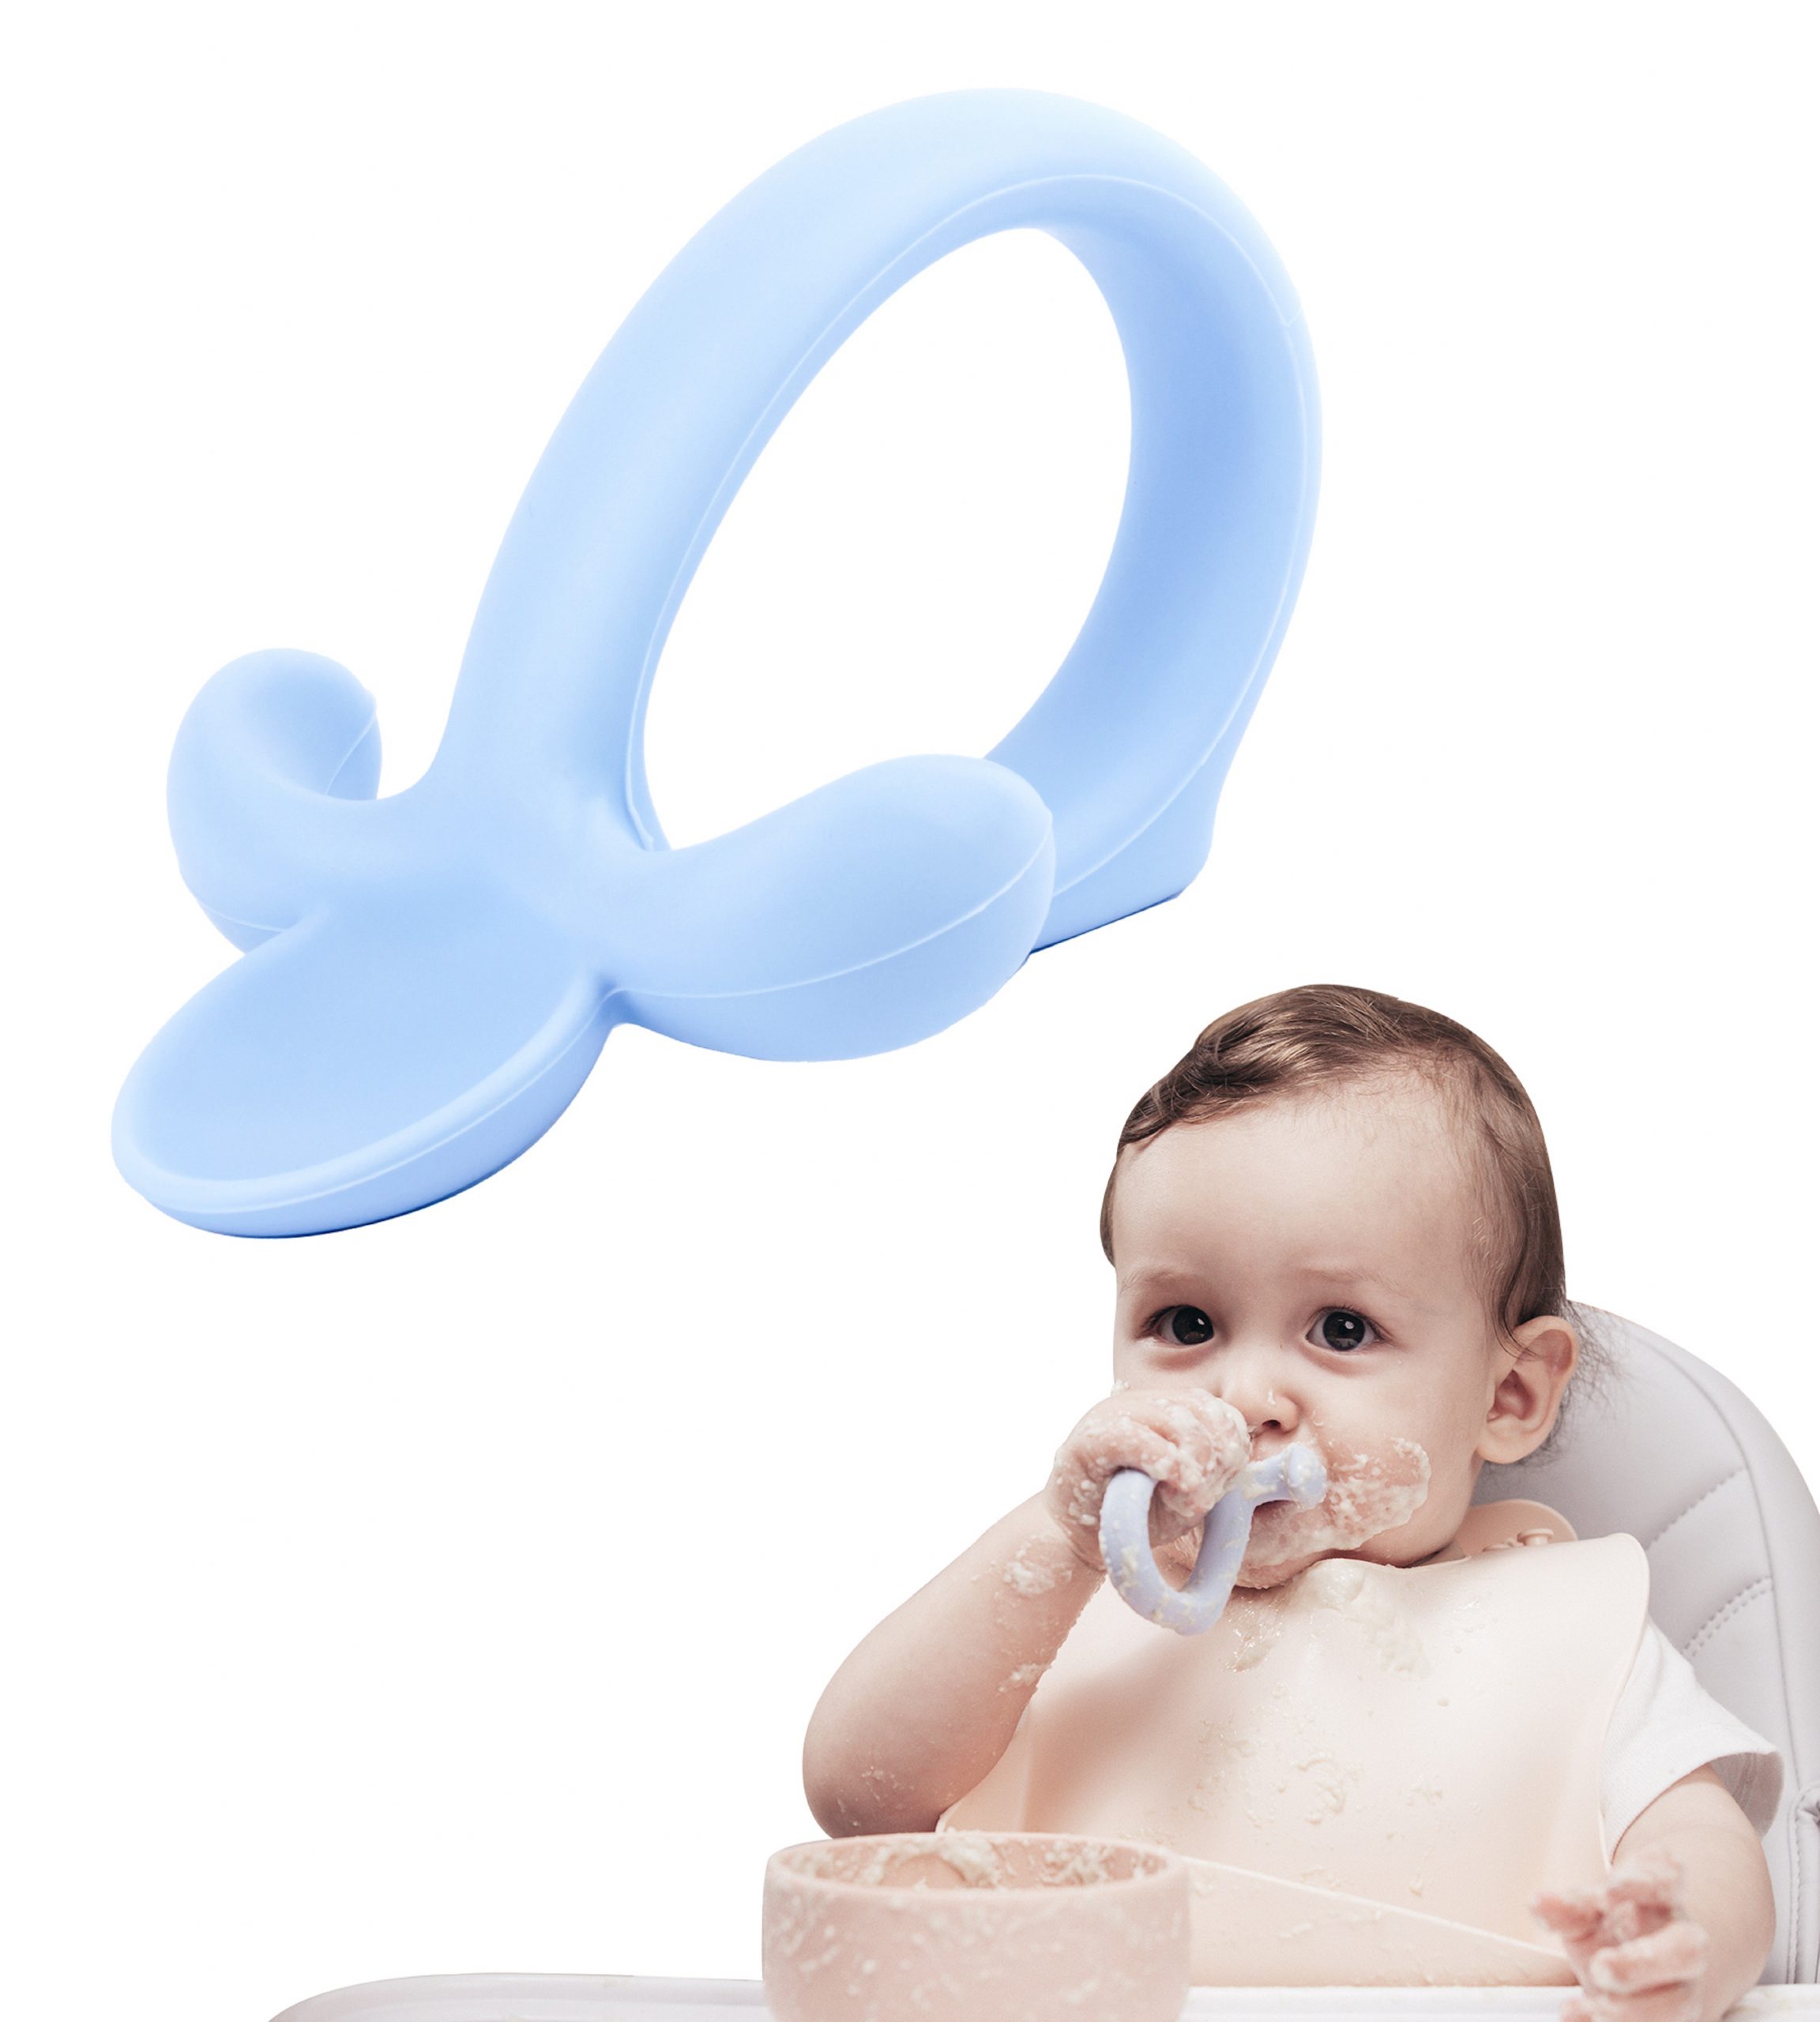 HOFISH Silicone Baby Training Spoons